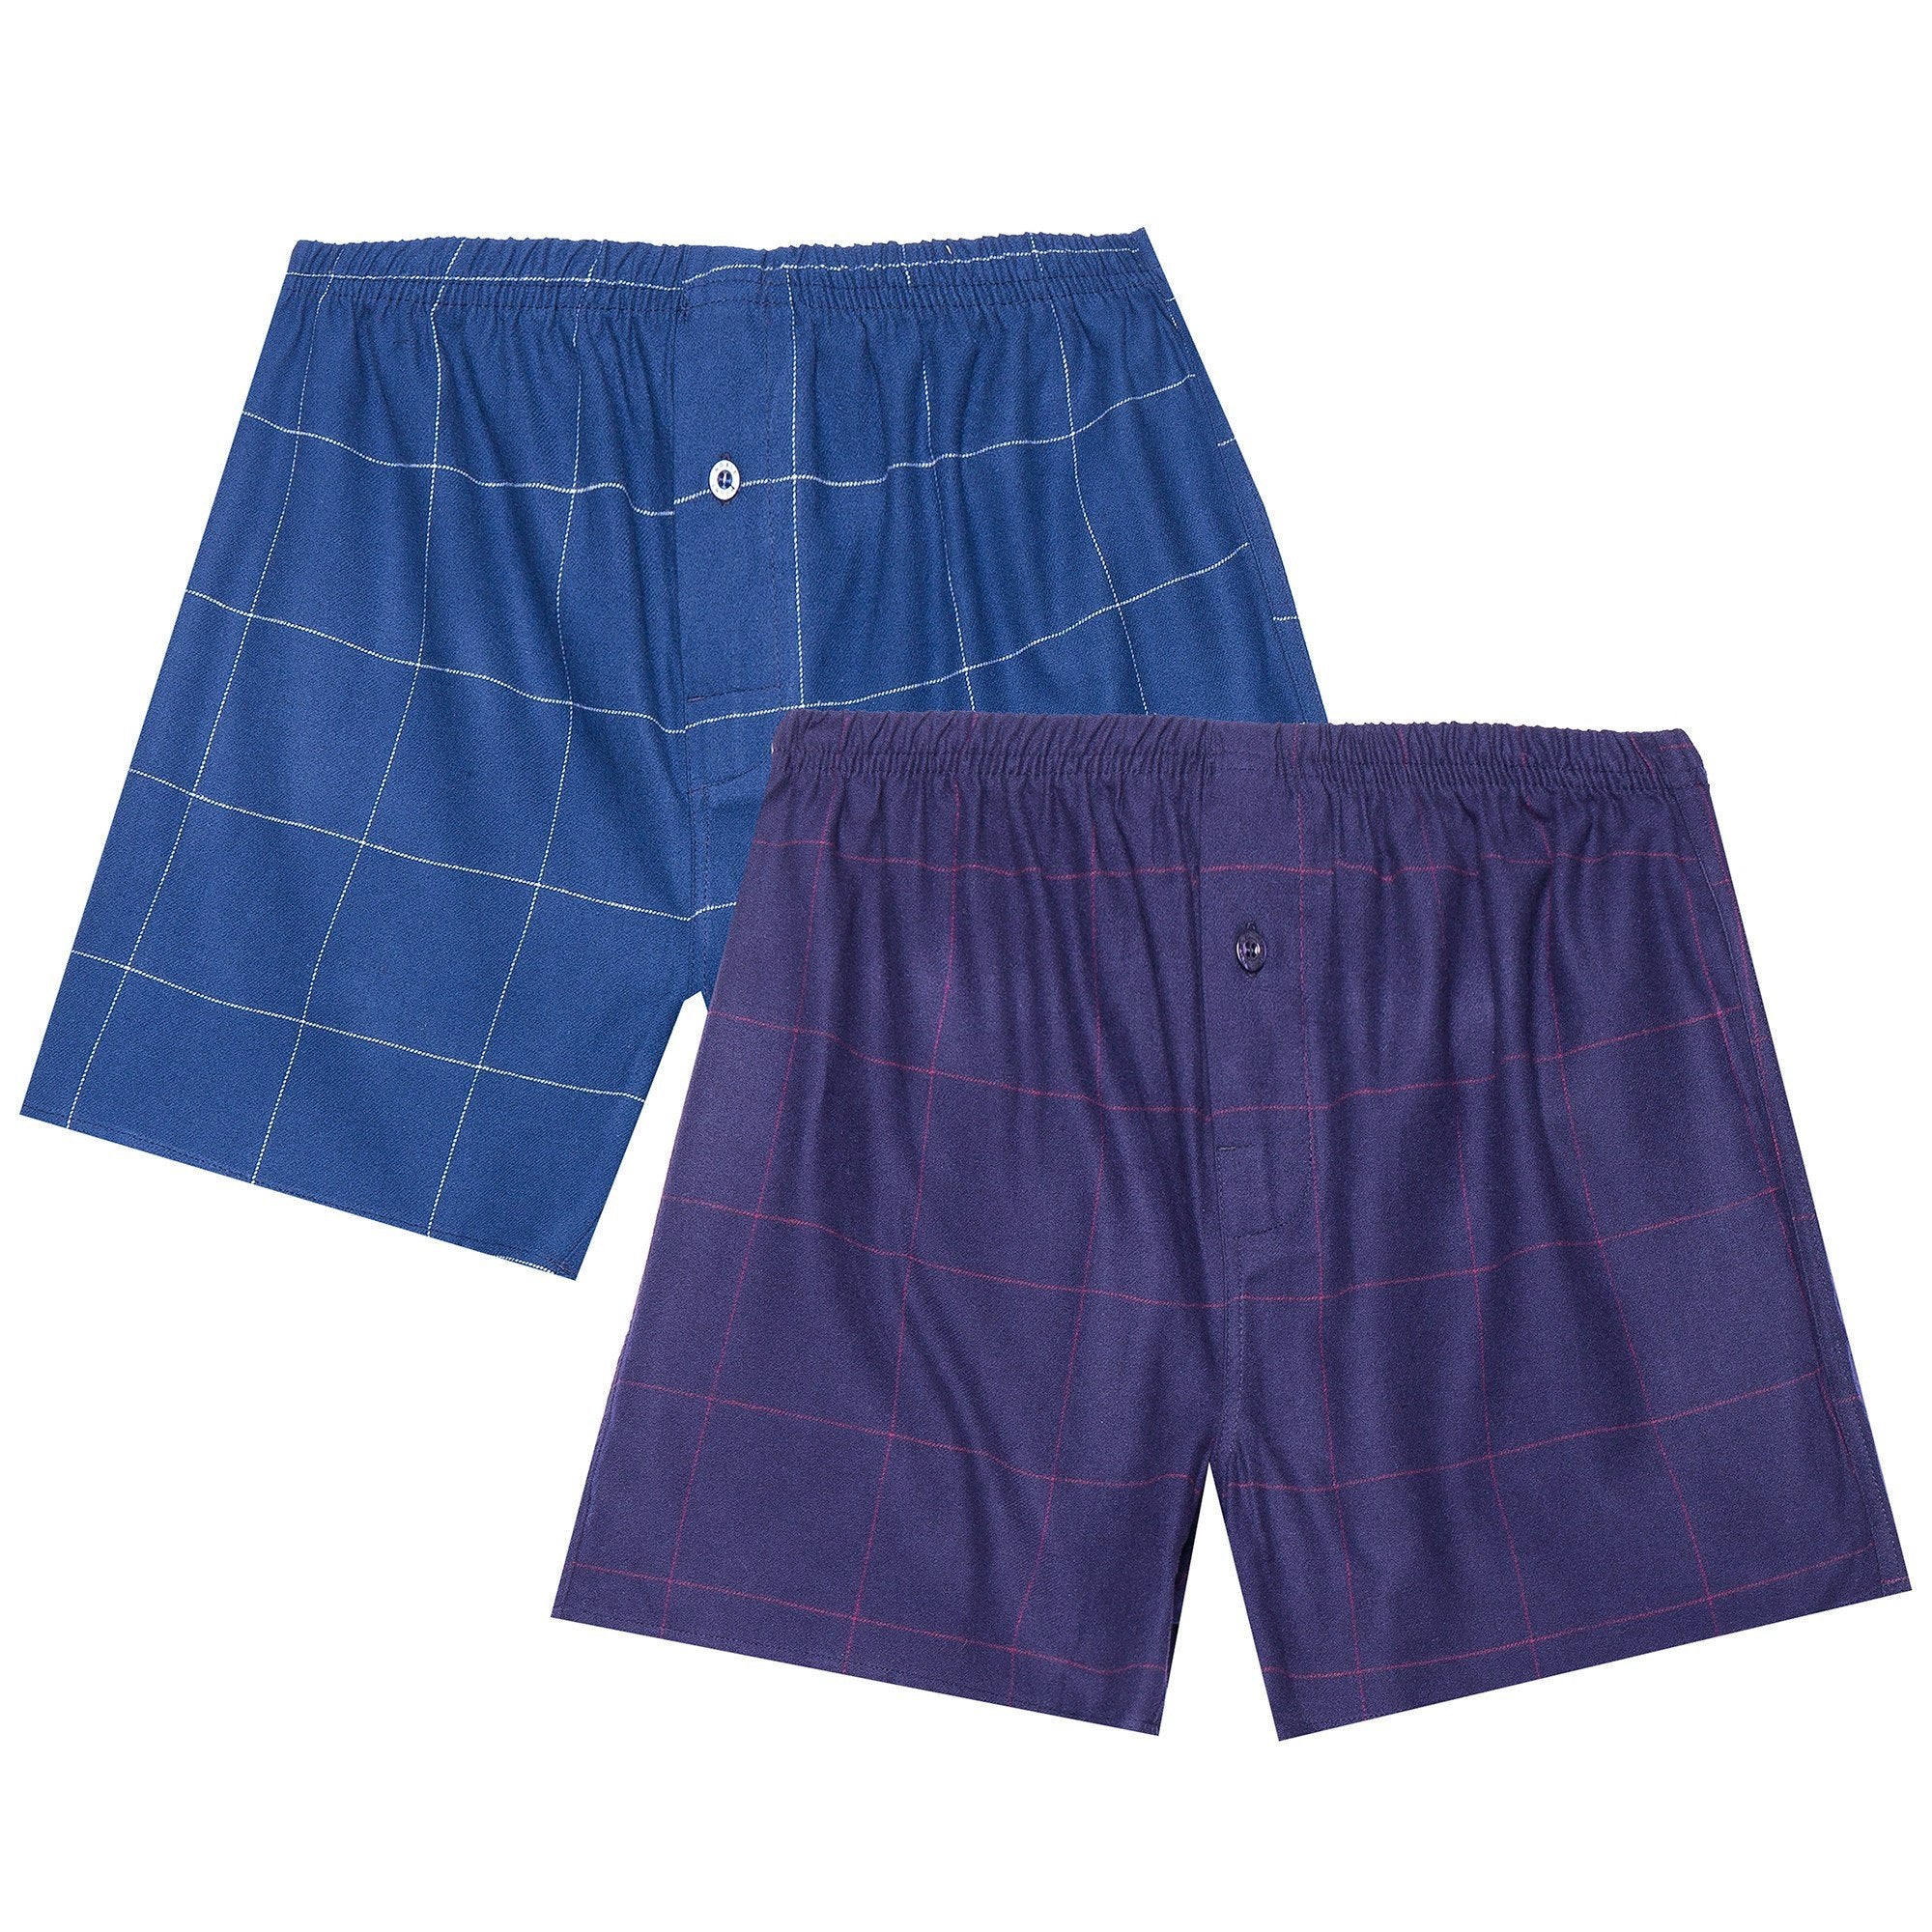 Men's 100% Cotton Flannel Boxers - 2 Pack - Windowpane Checks Blue-Red/Dark Blue